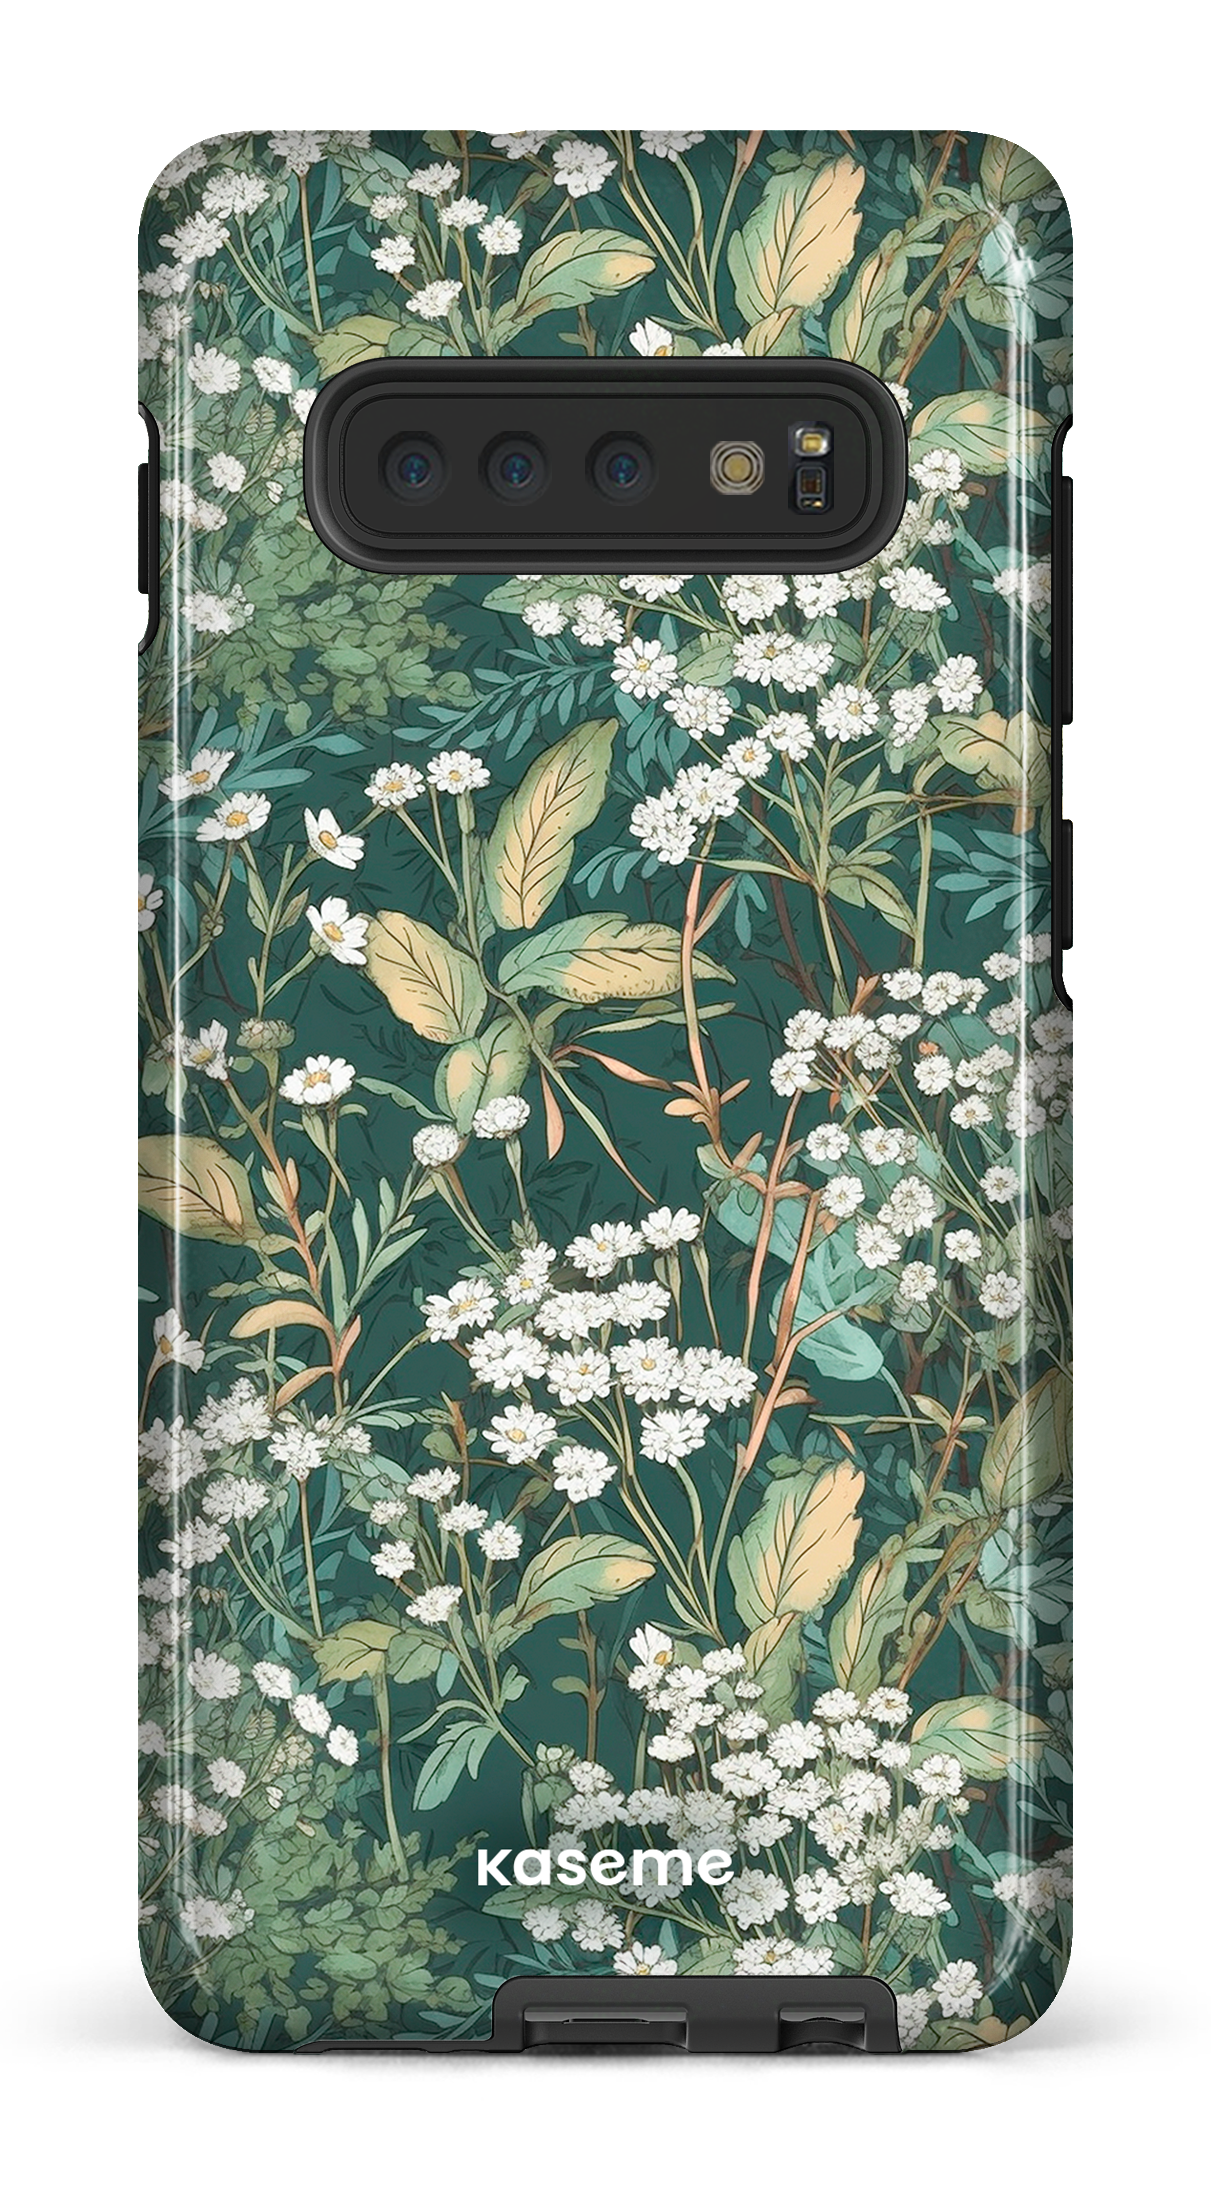 Untamed blossom - Galaxy S10 Plus